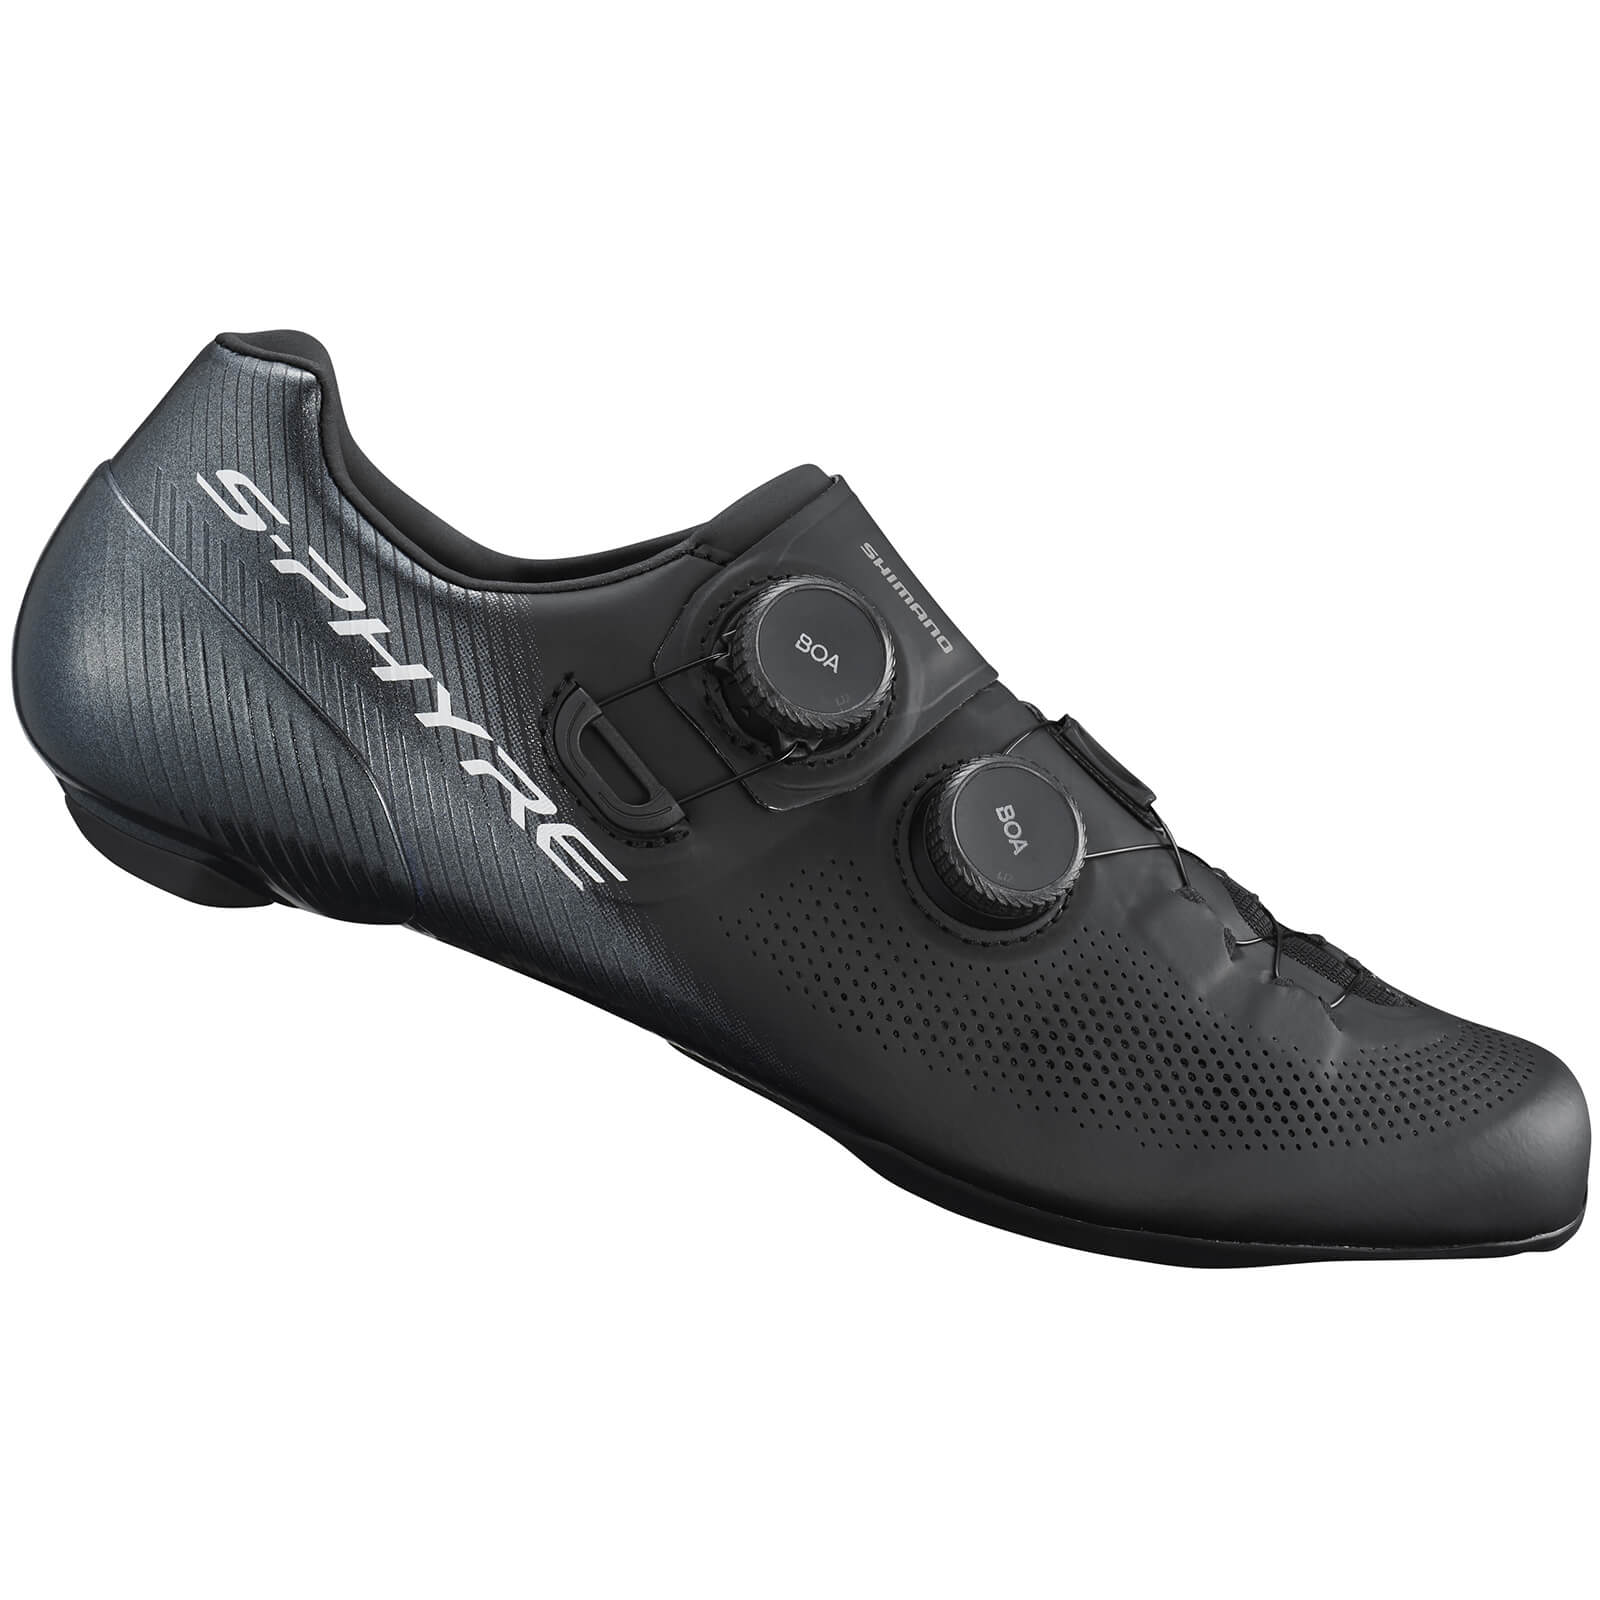 Shimano RC903 S-Phyre Road Cycling Shoes - 44 - Black